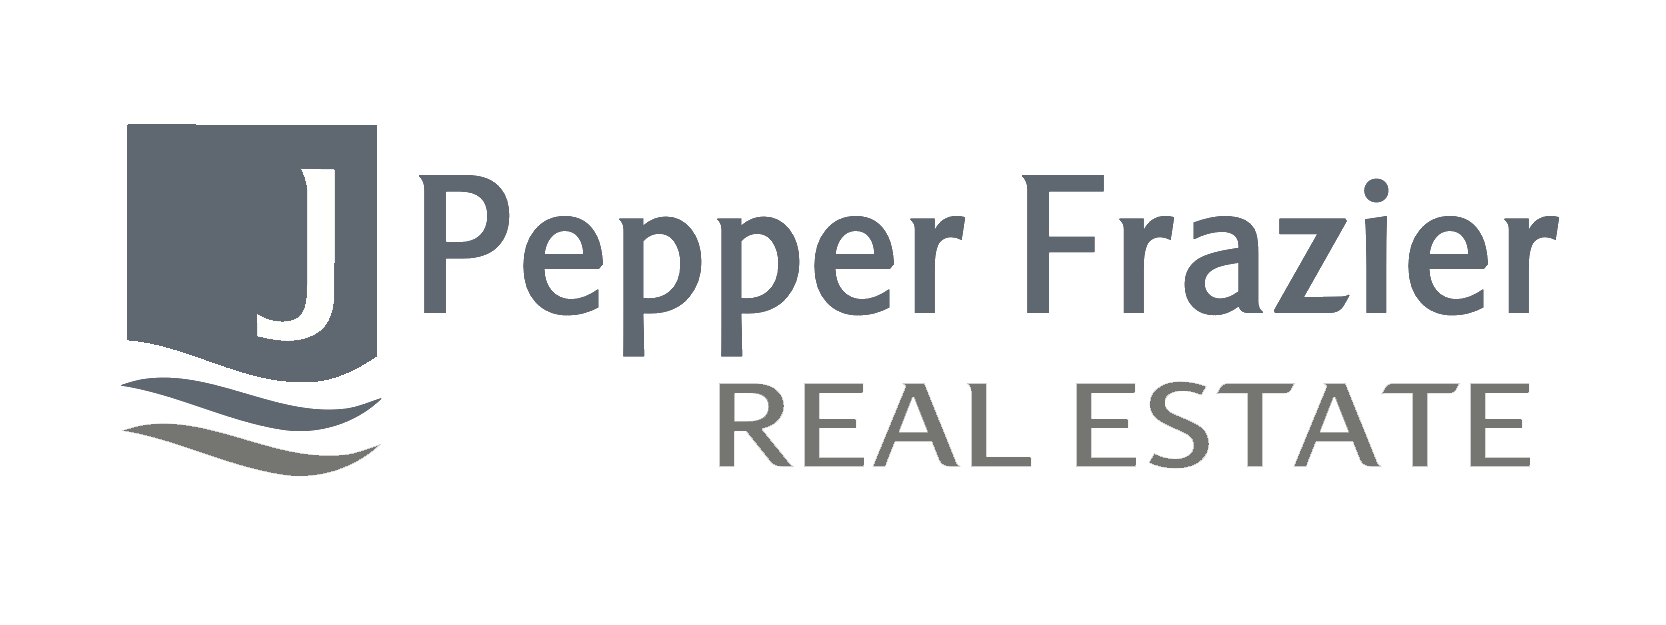 J Pepper Frazier Real Estate